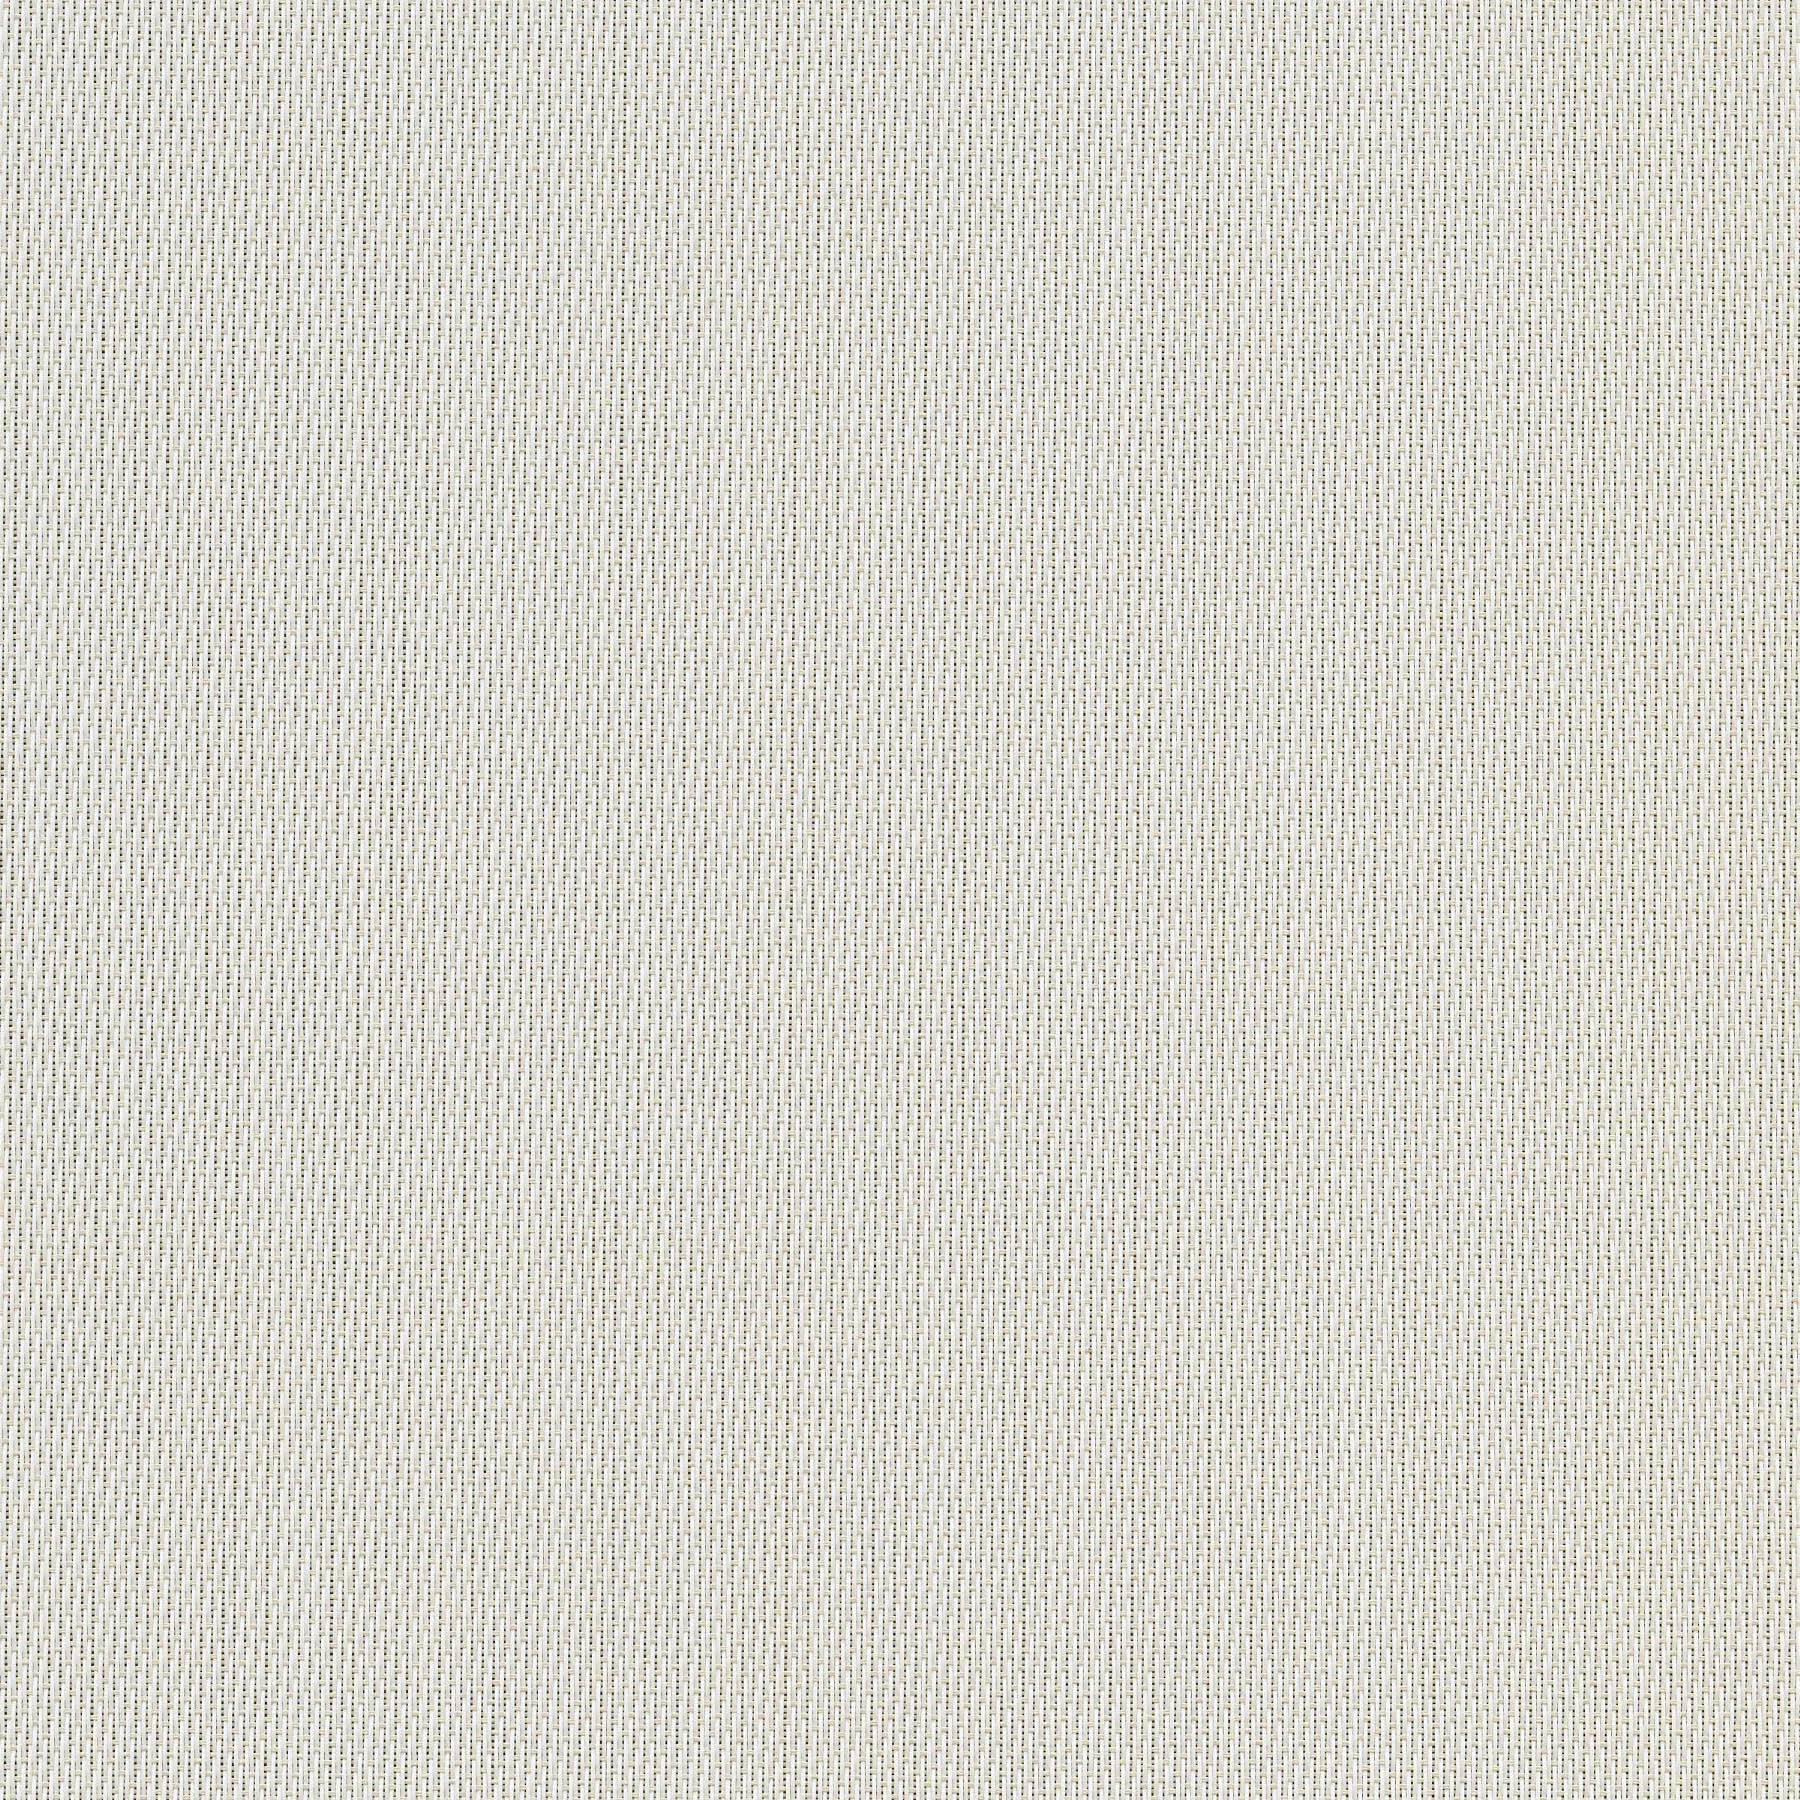 Altex - Fabric - SHEERWEAVE 2705 - Beige/White - 172